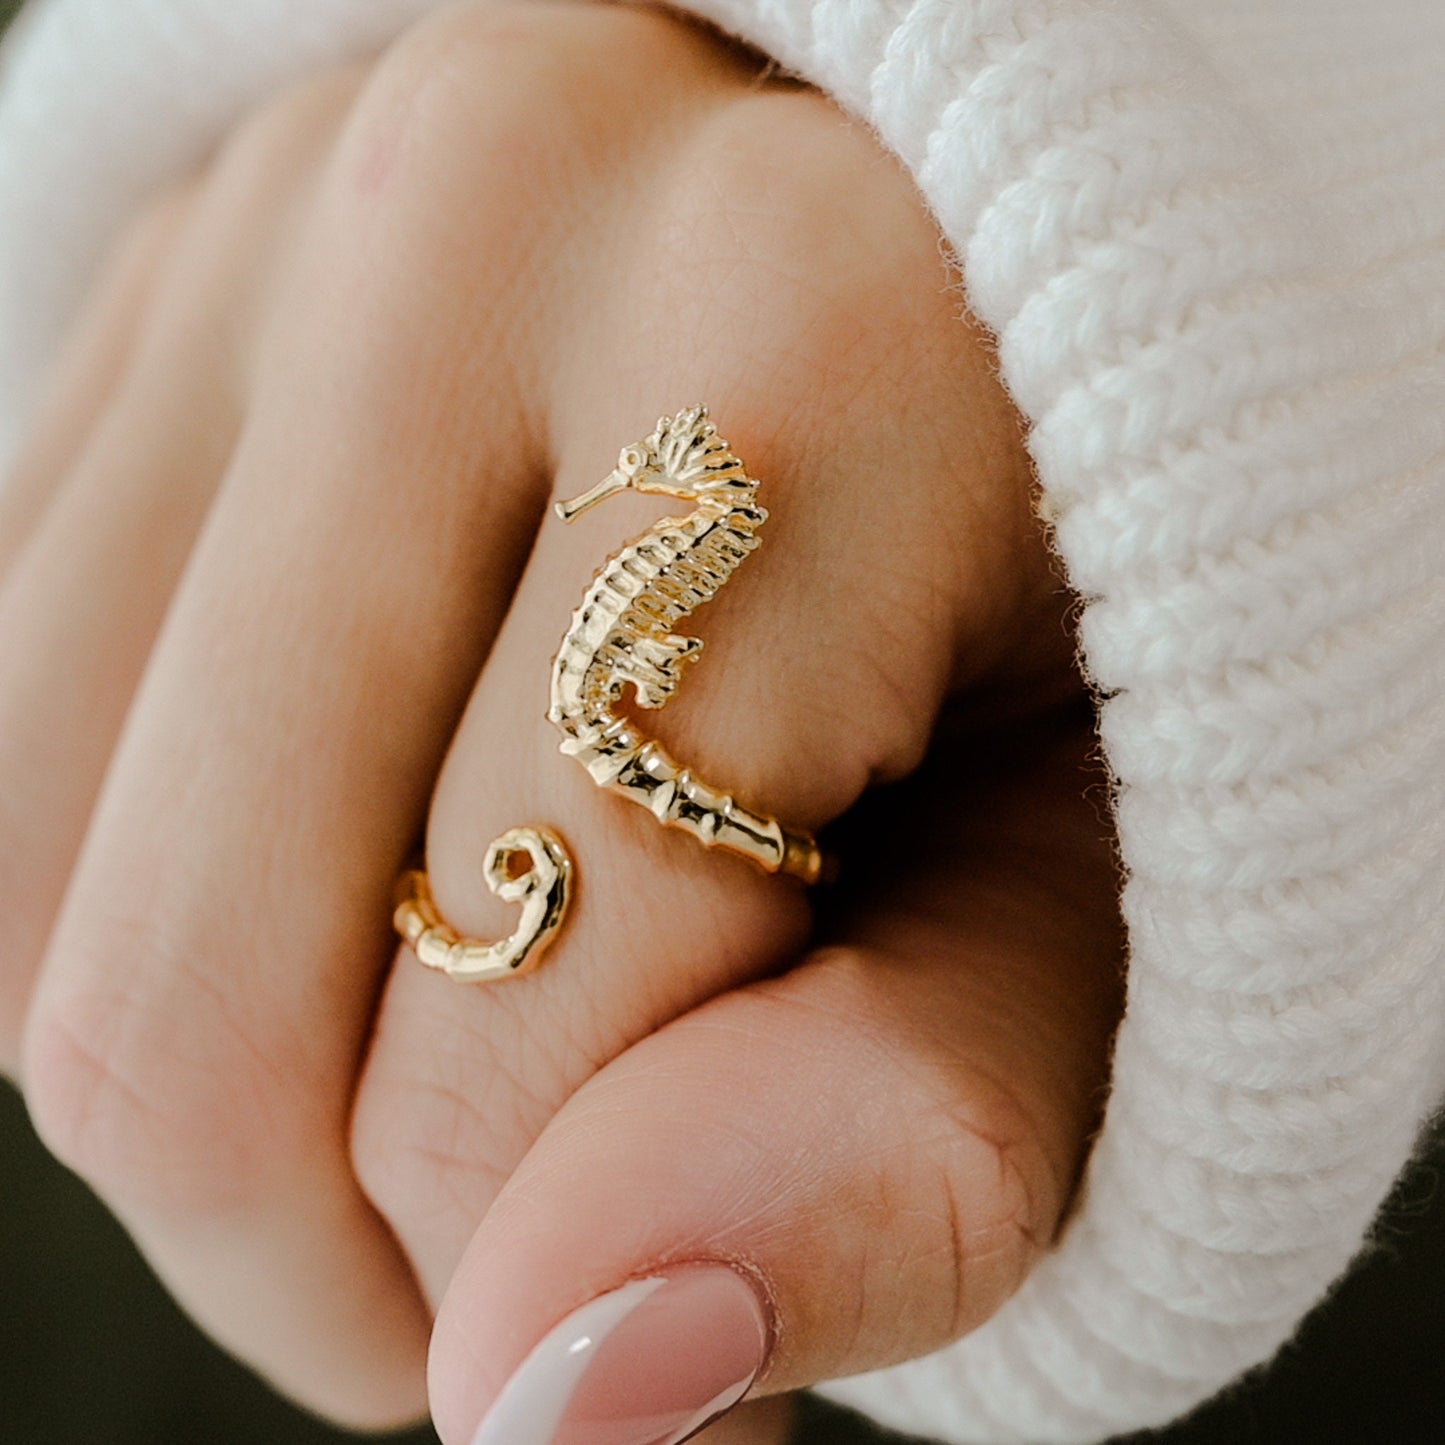 Seahorse Ring